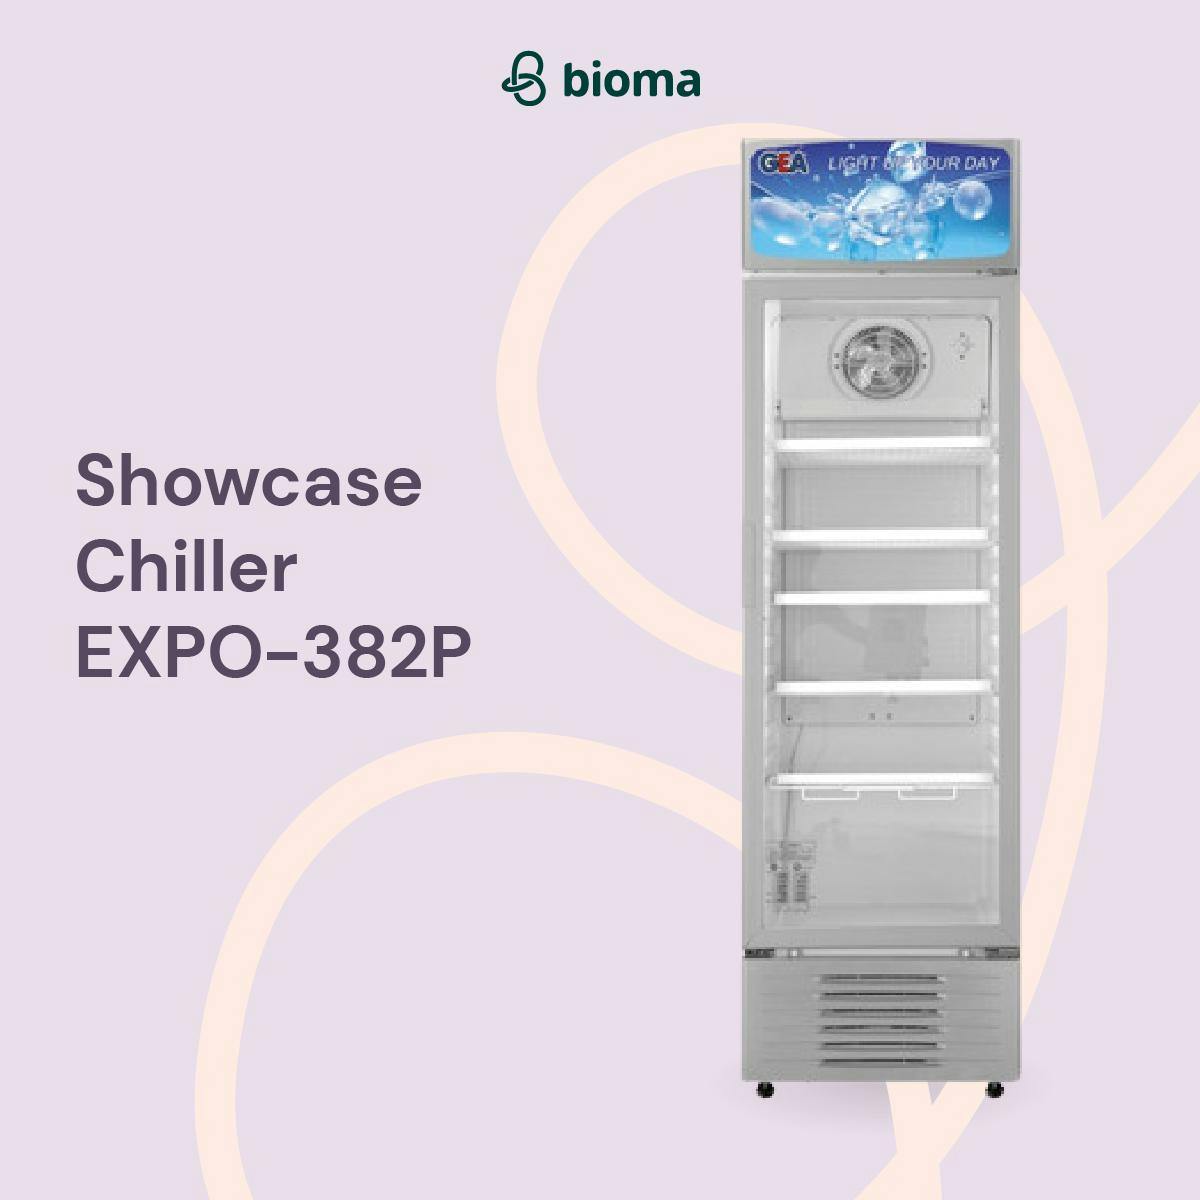 Showcase Chiller EXPO-382P